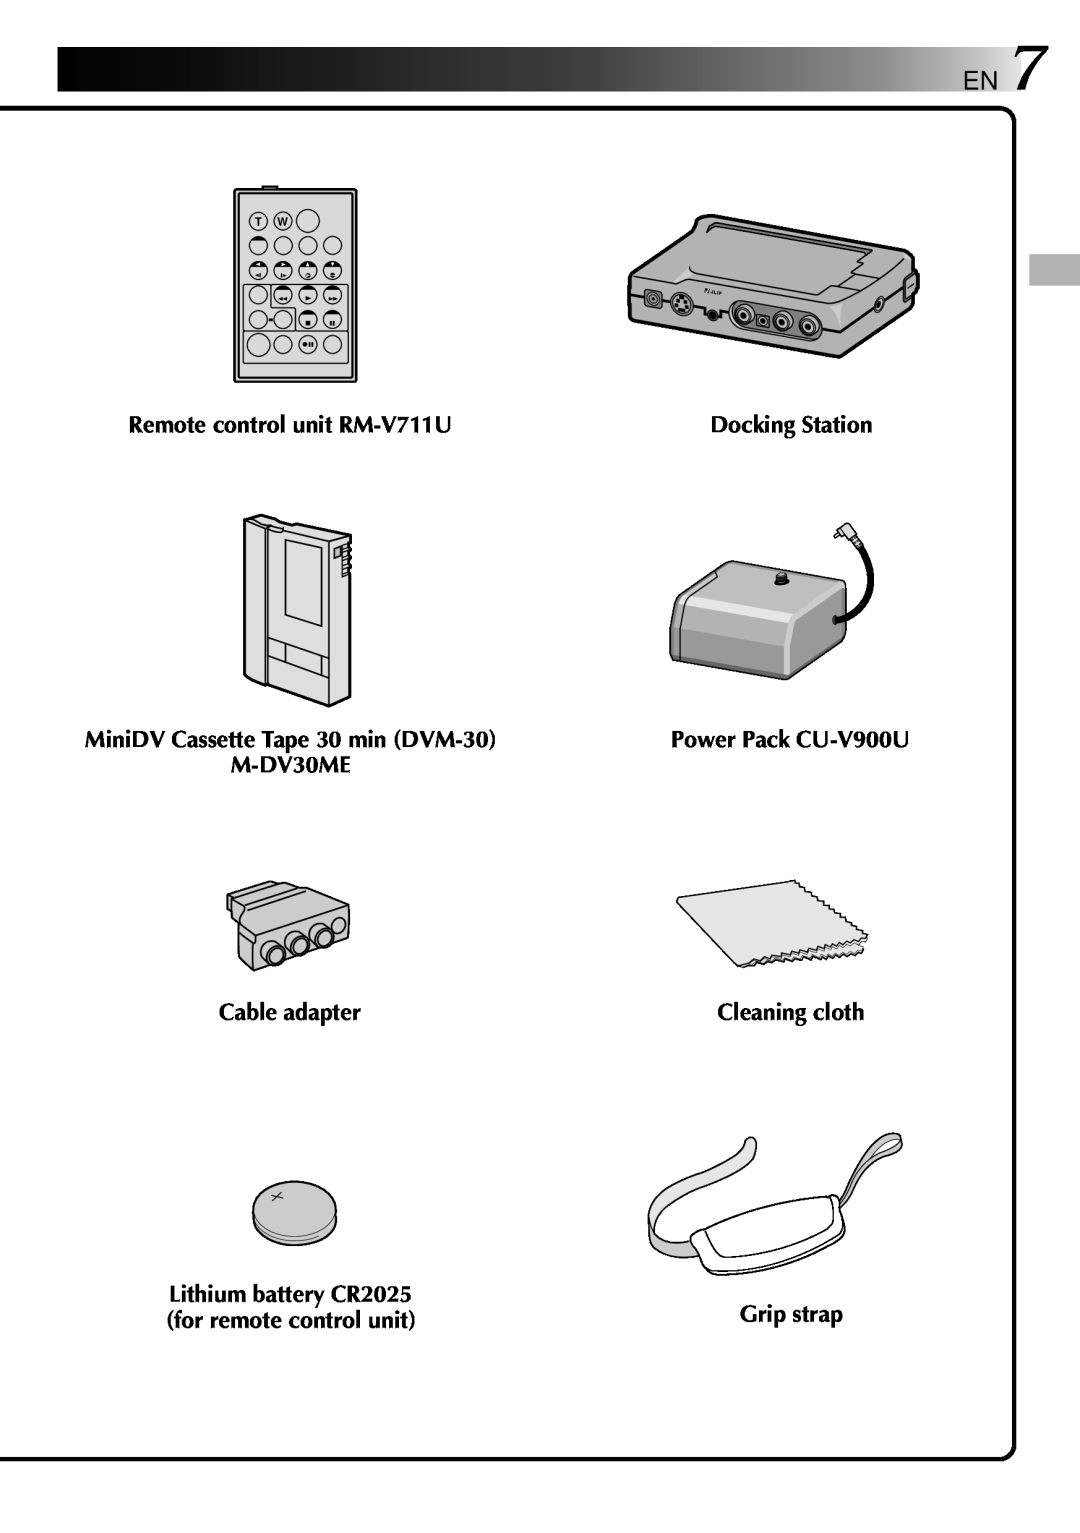 JVC 0797TOV*UN*VP Remote control unit RM-V711U, M-DV30ME, Cable adapter, Lithium battery CR2025, for remote control unit 